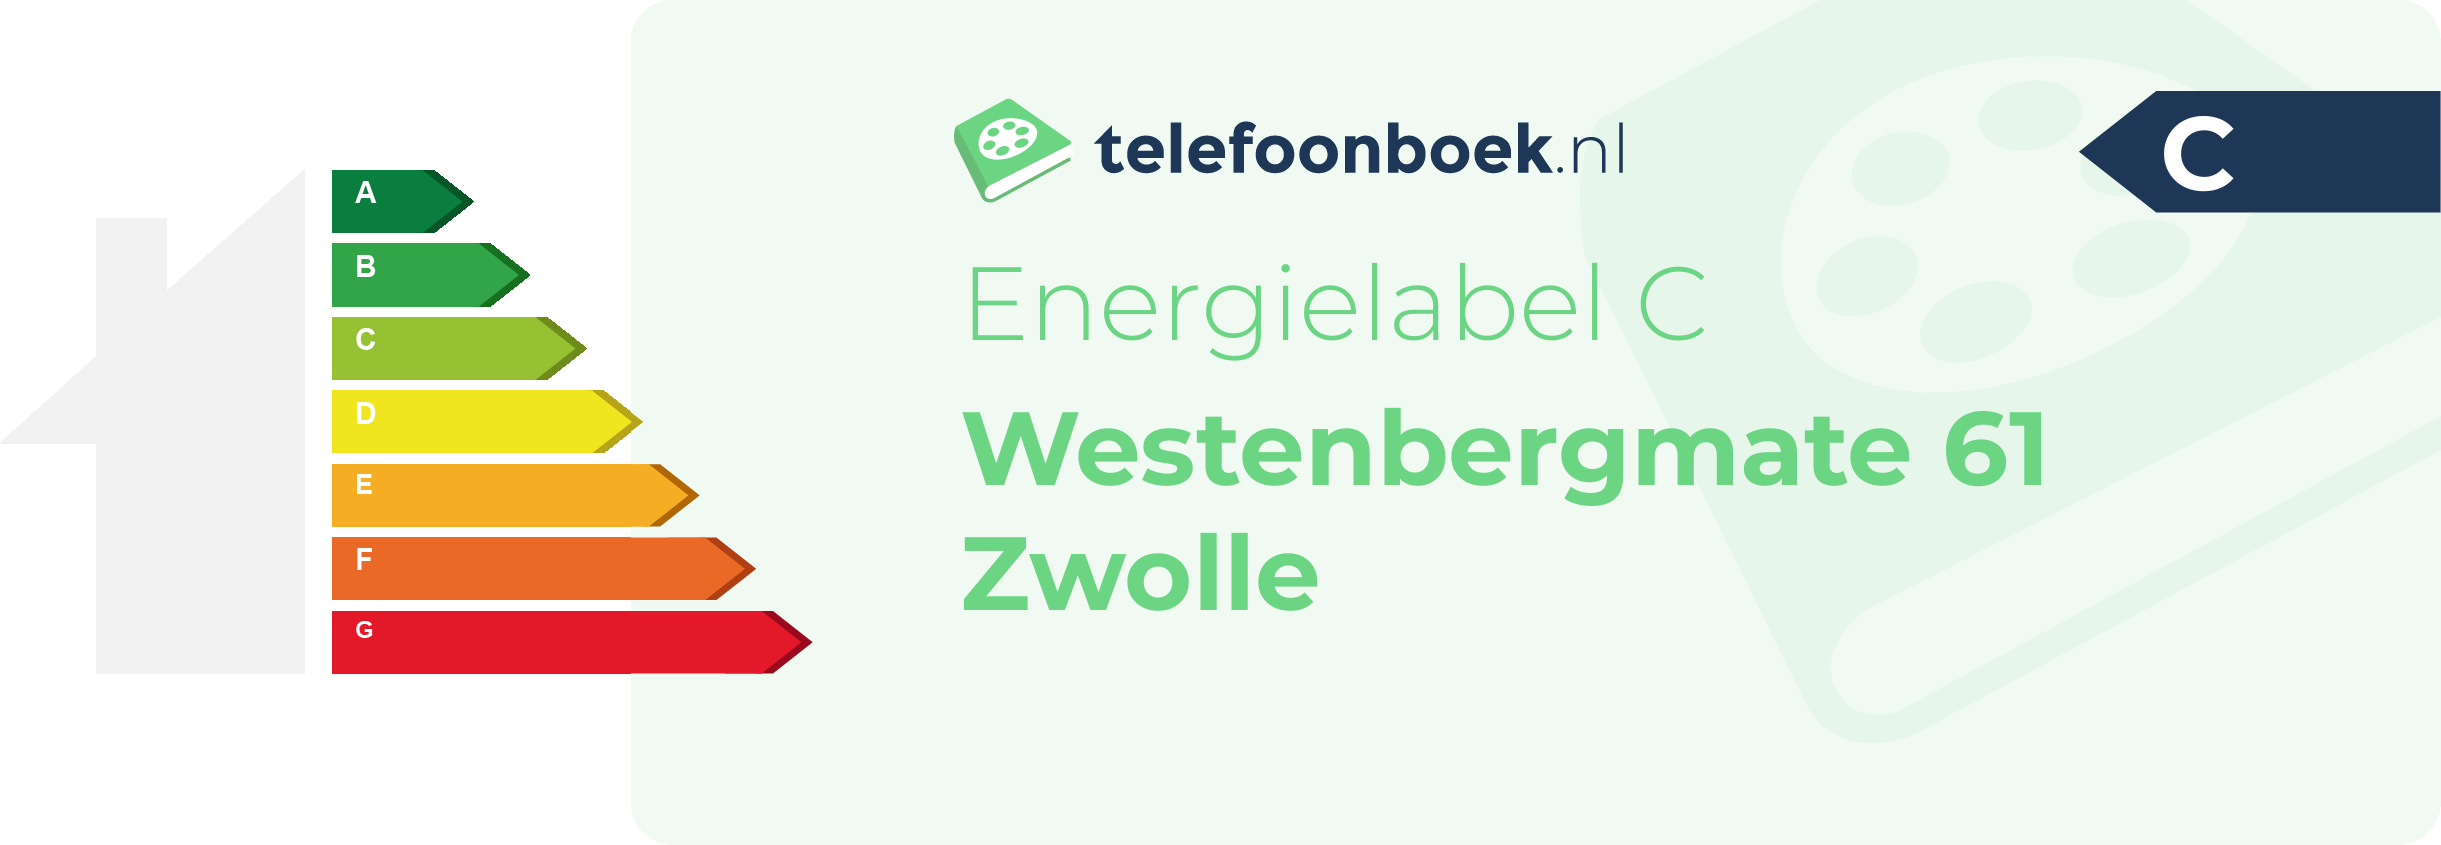 Energielabel Westenbergmate 61 Zwolle